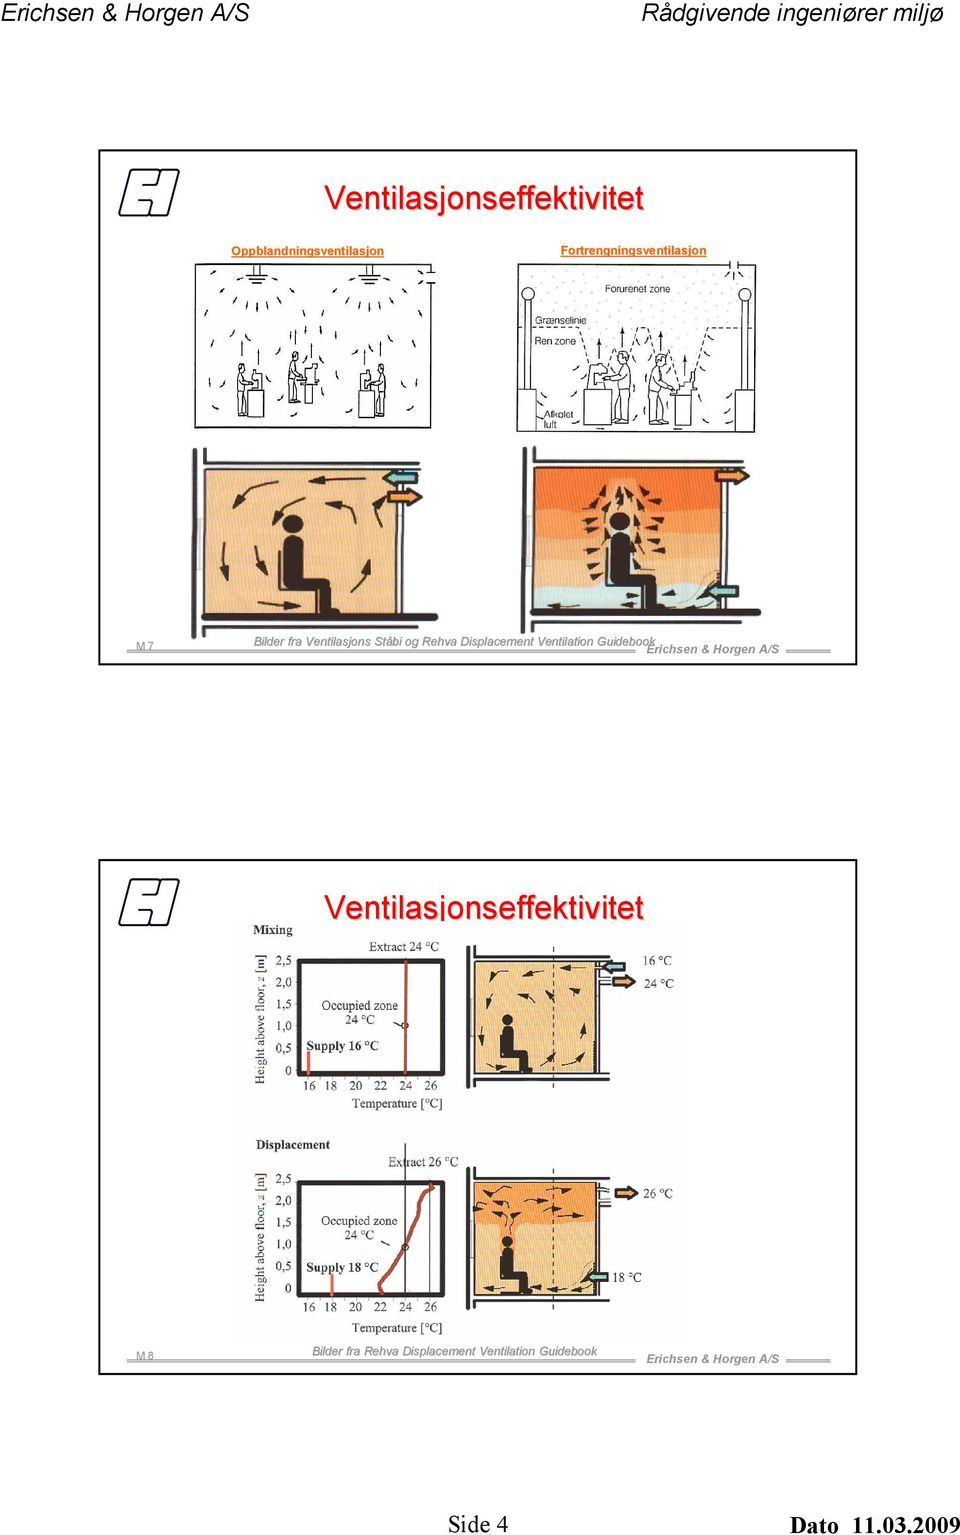 Rehva Displacement Ventilation Guidebook